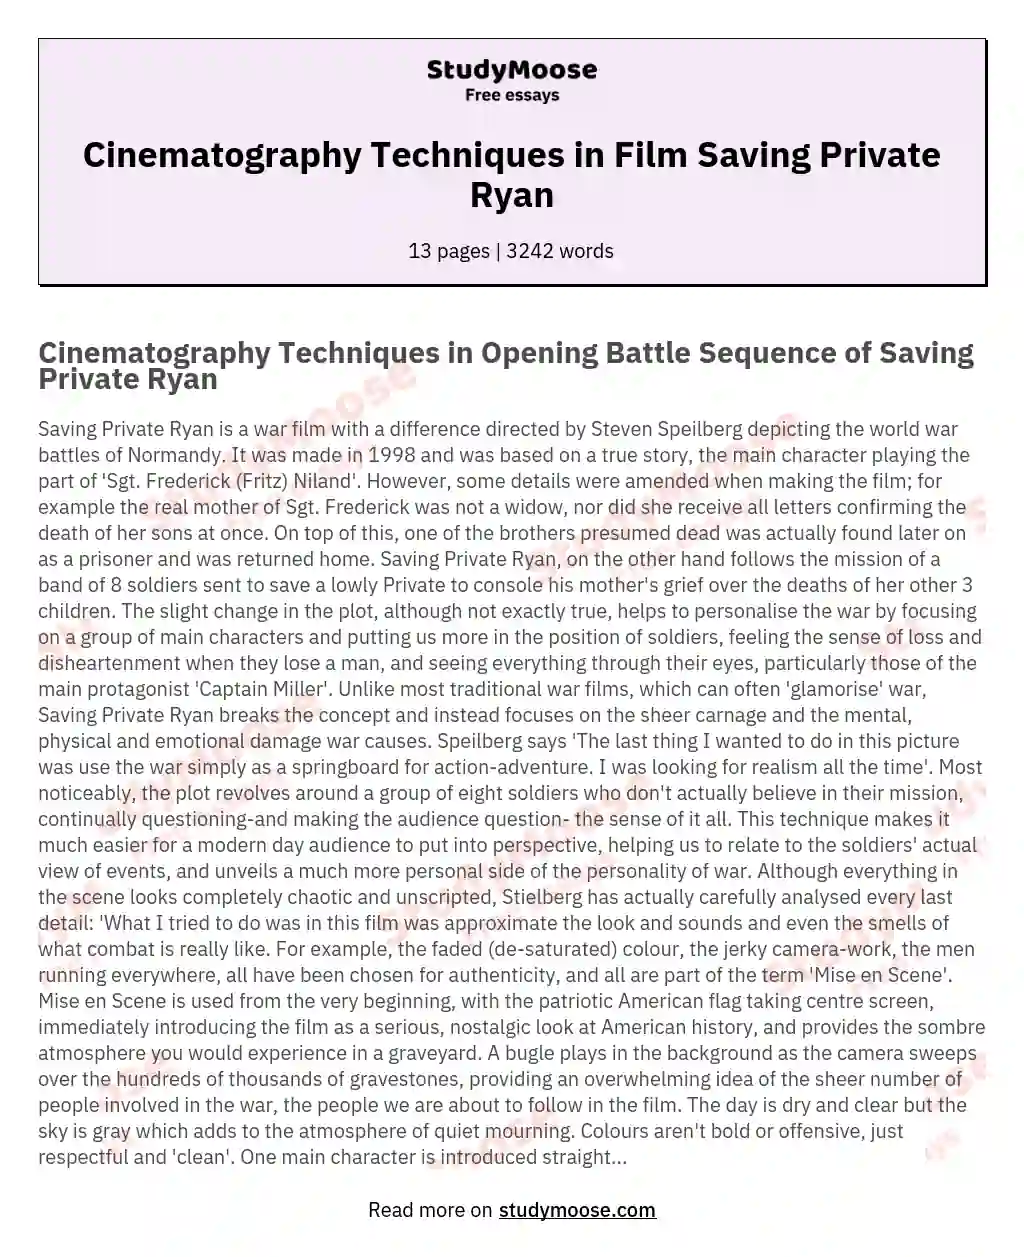 Cinematography Techniques in Film Saving Private Ryan essay